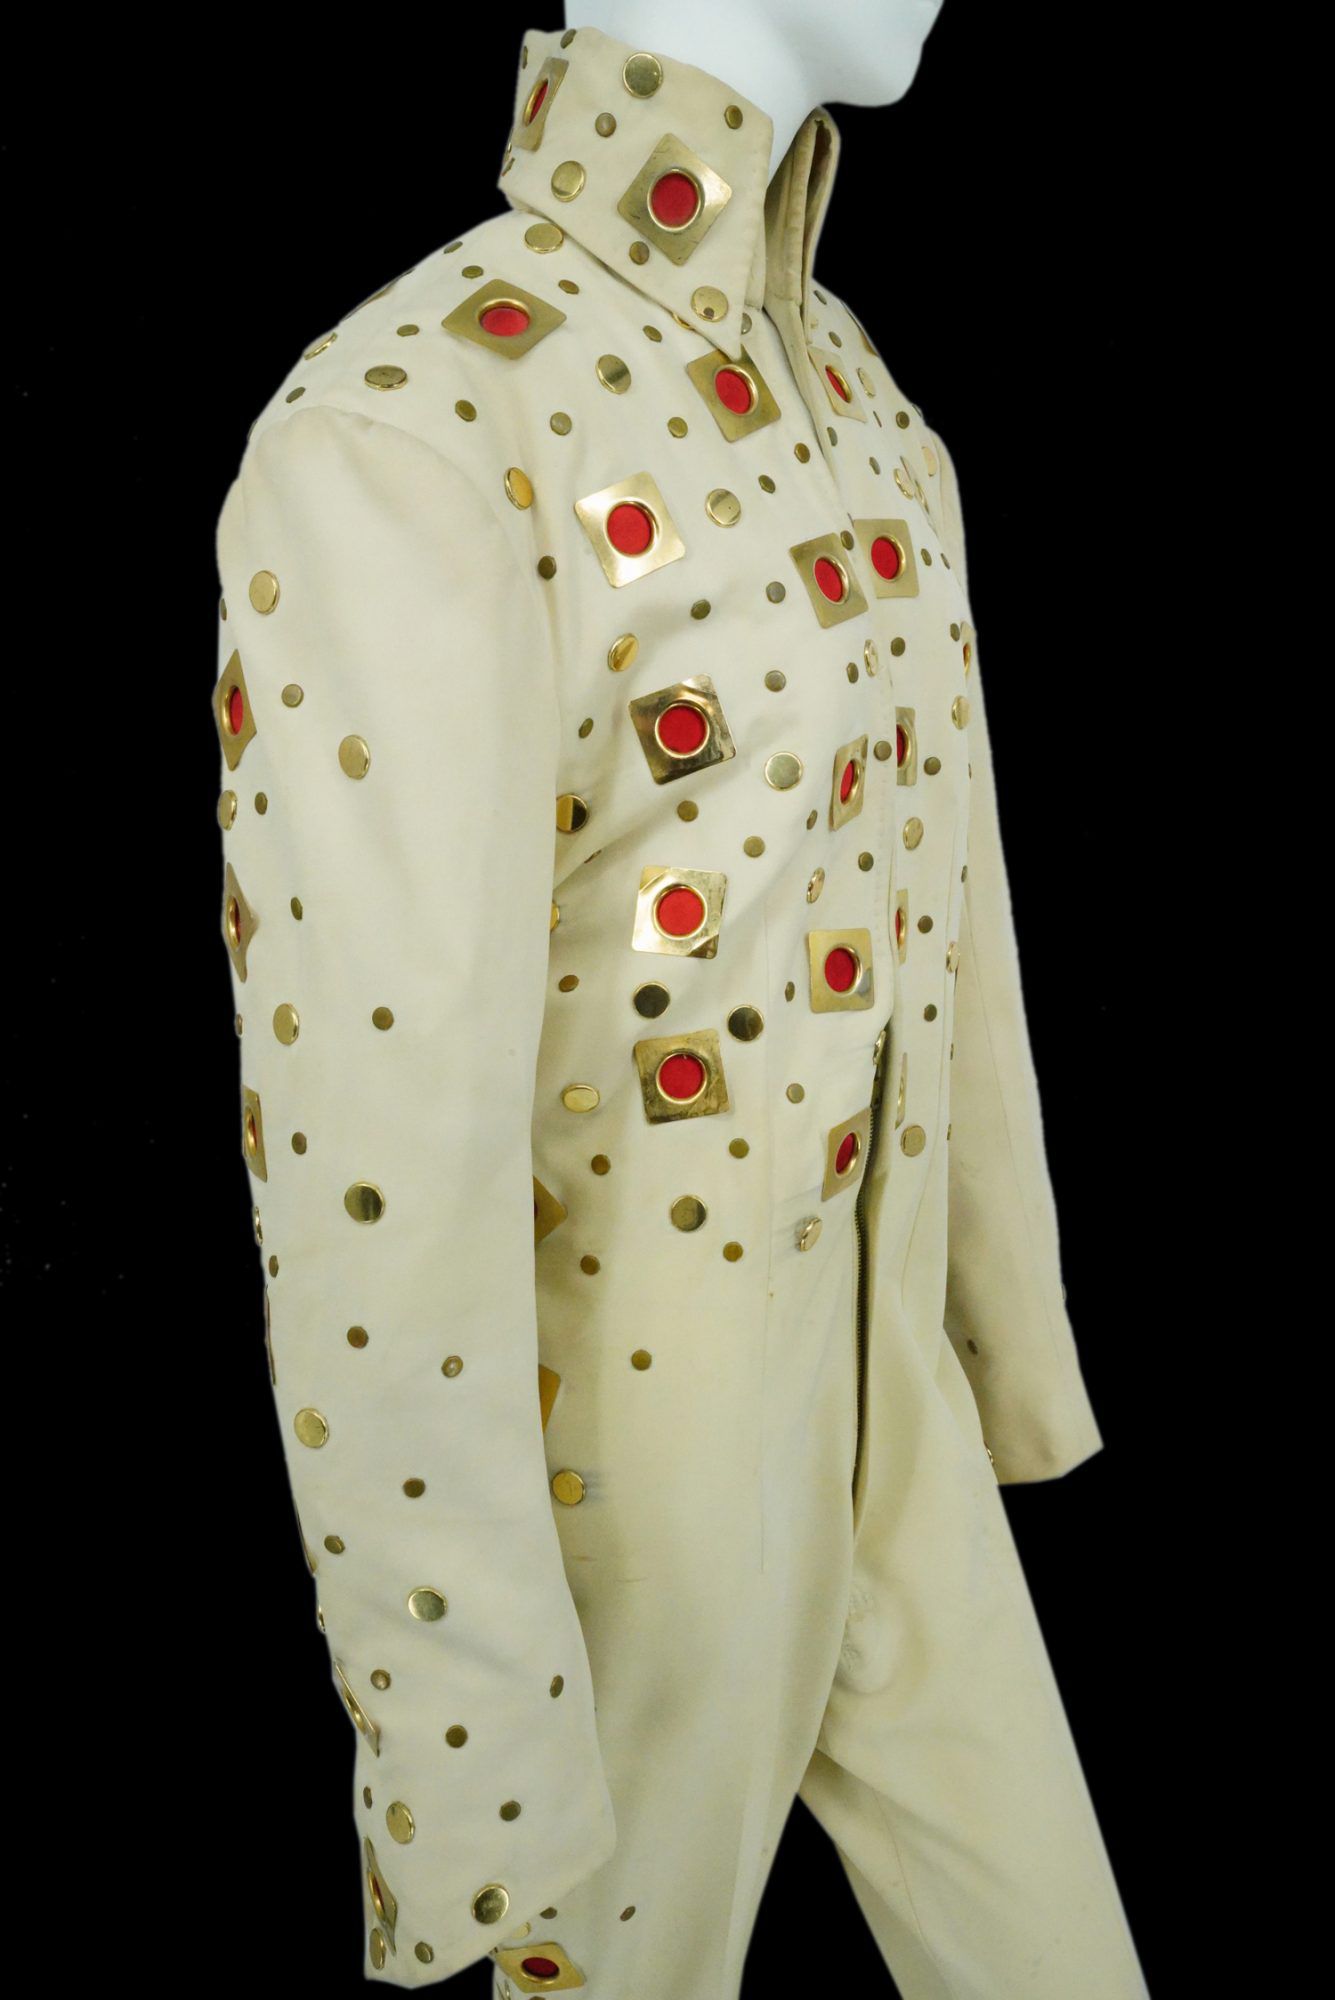 Elvis Presley's iconic jumpsuit